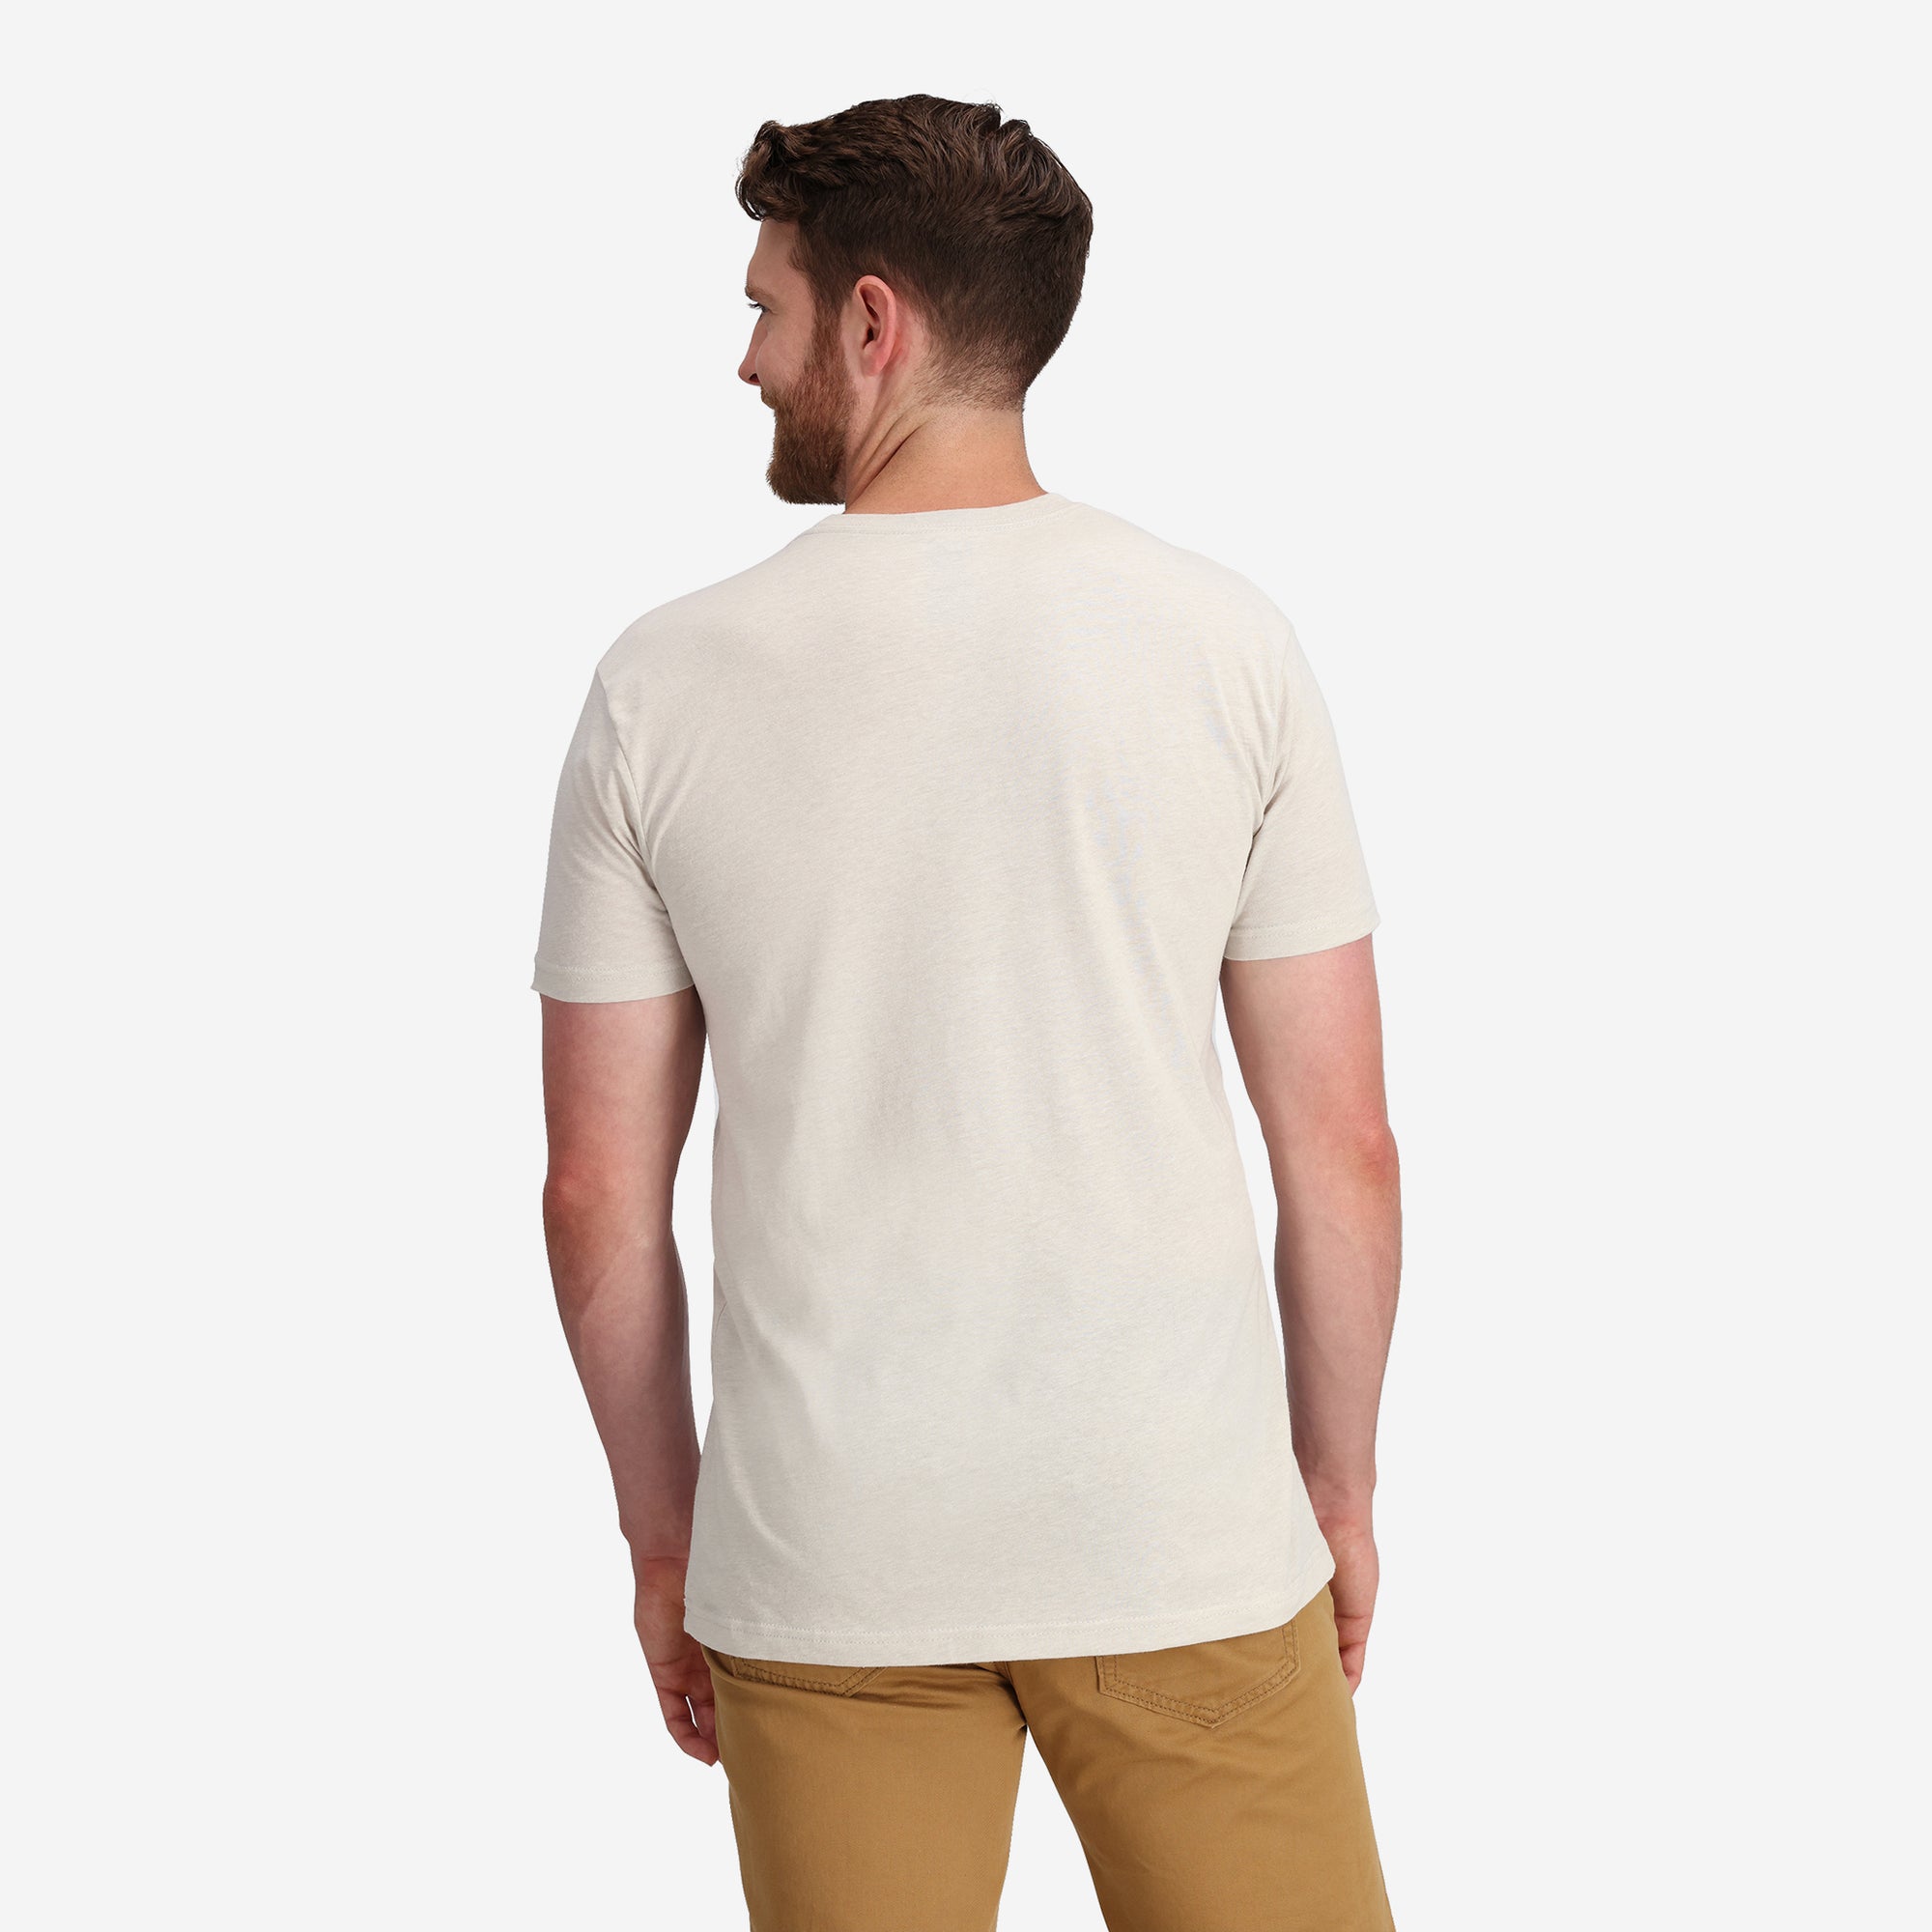 Unisex Free To Roam Artist Series Colorado T-Shirt